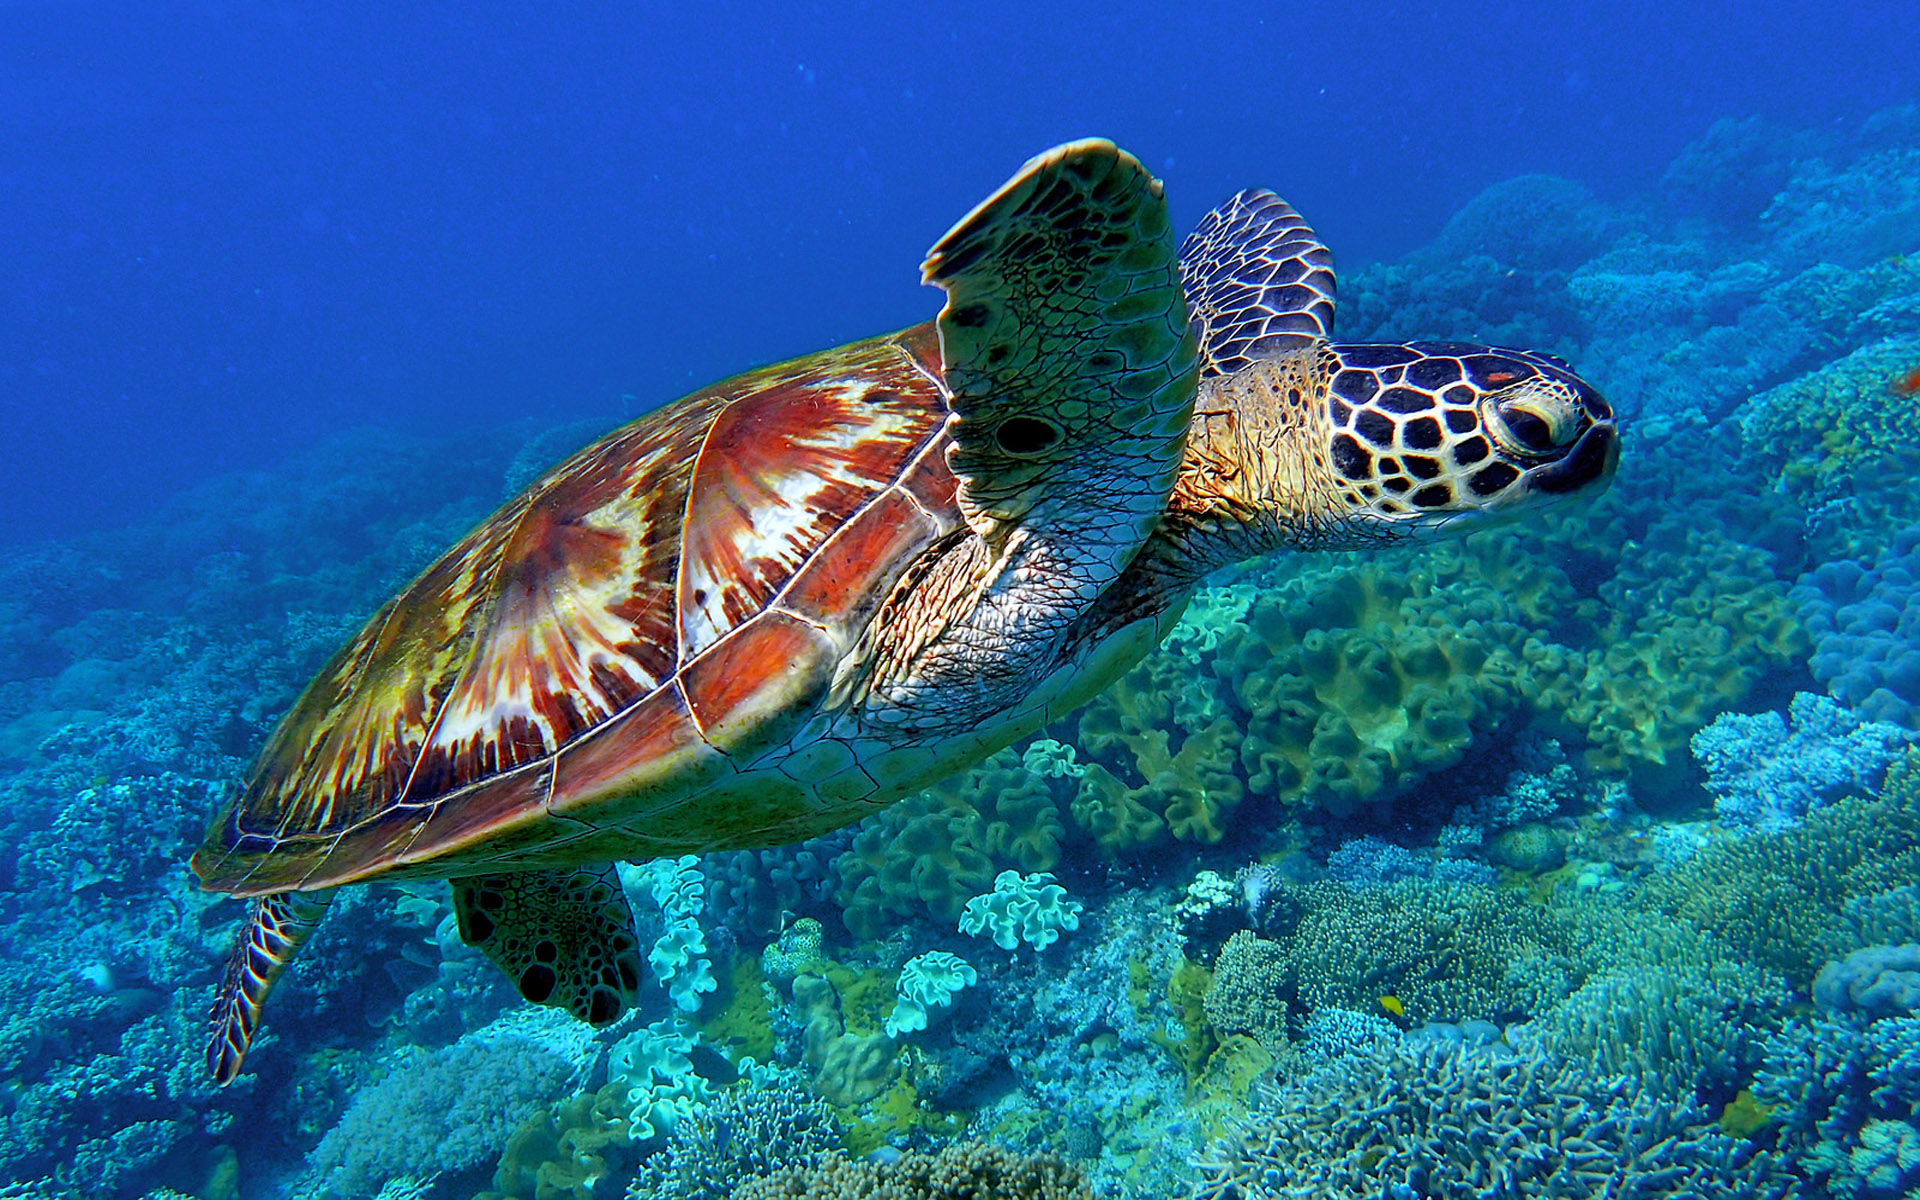 Green Sea Turtle From Pacific Scientific Name Chelonia Mydas Apo Island